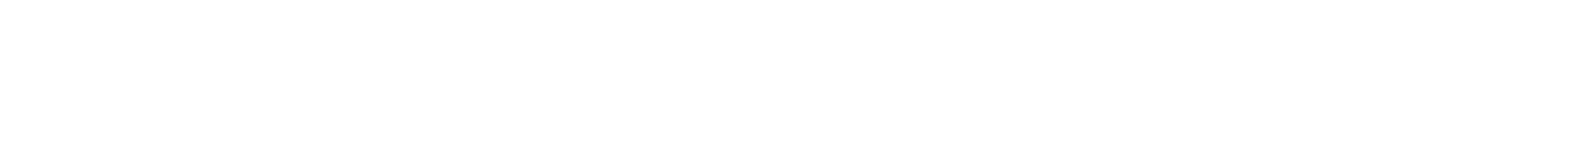 Giordano logo large for dark backgrounds (transparent PNG)